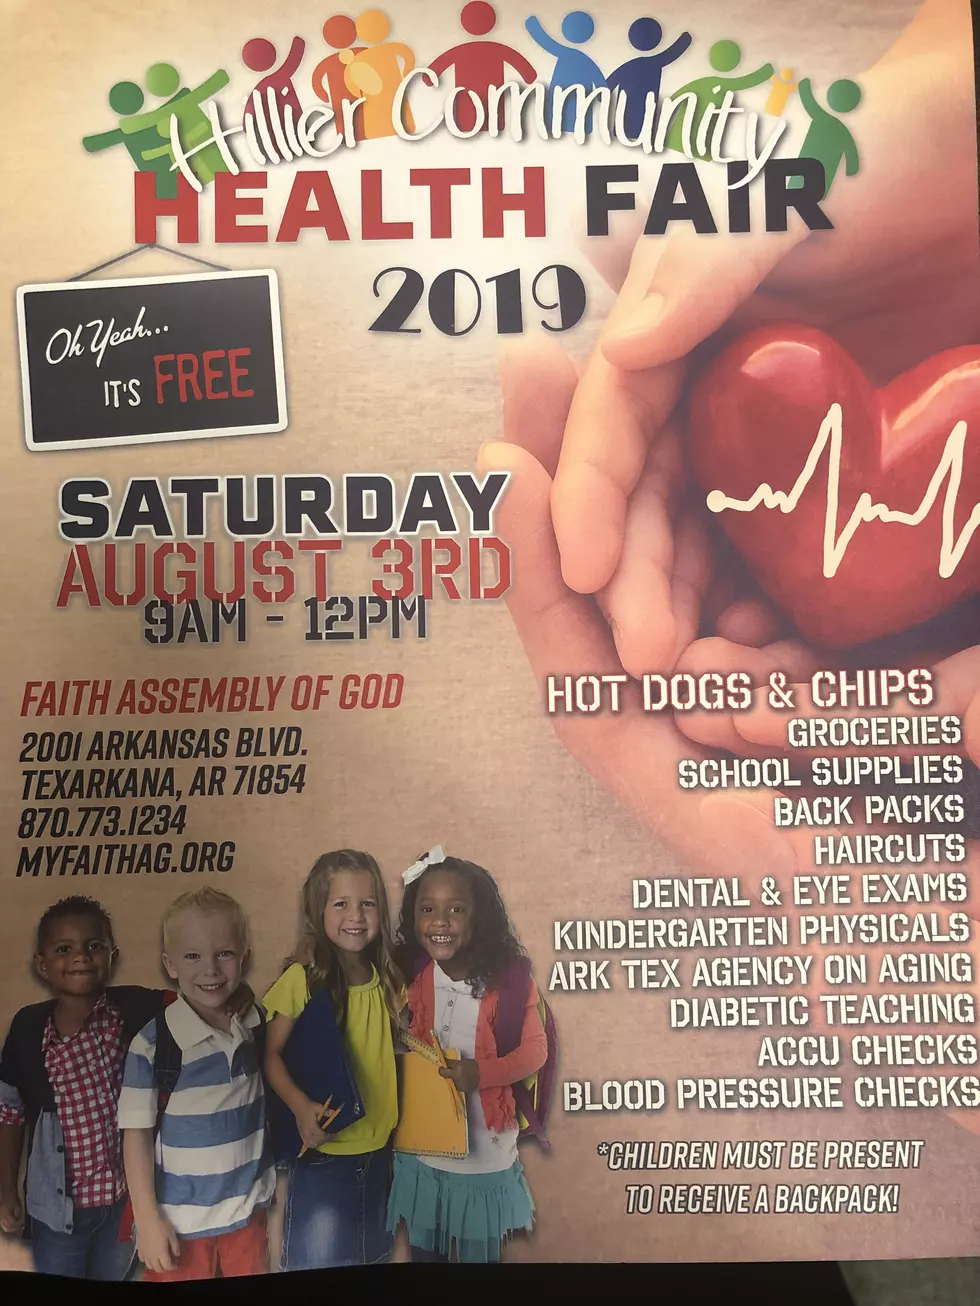 Hillier Community Health Fair 2019